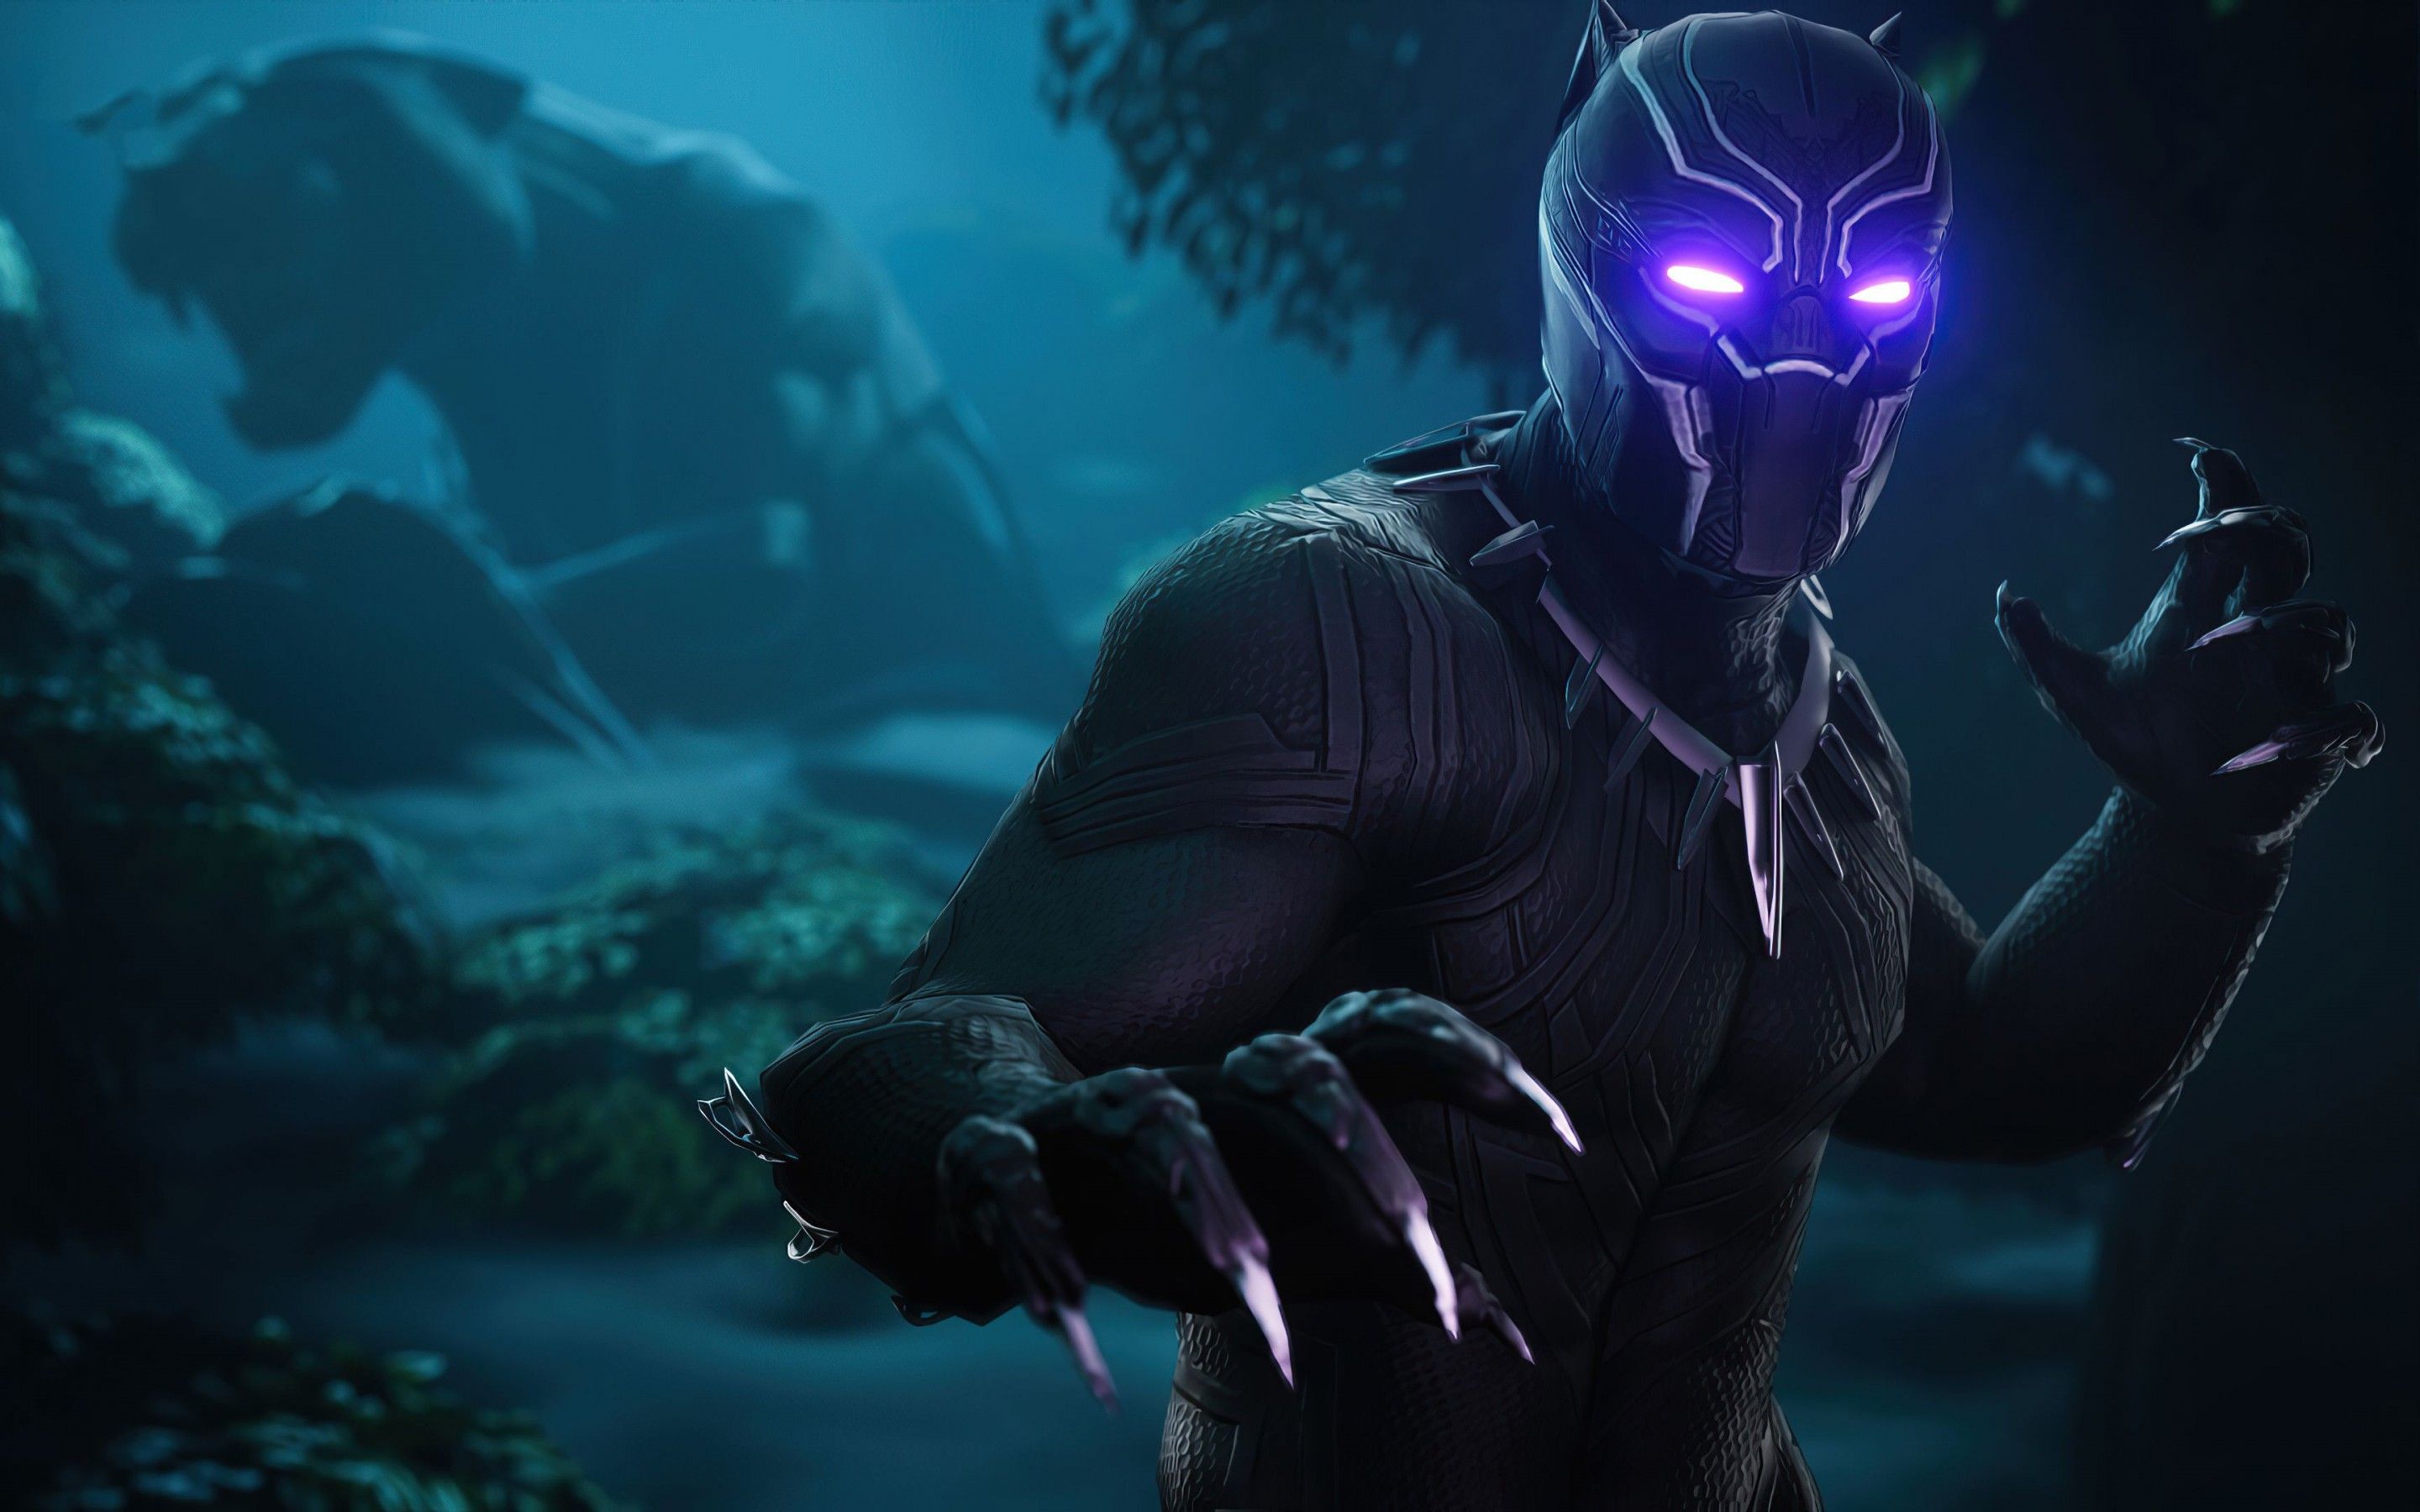 Black Panther 4K Wallpaper, Fortnite, Skin, Dark, 2020 Games, Neon, Games